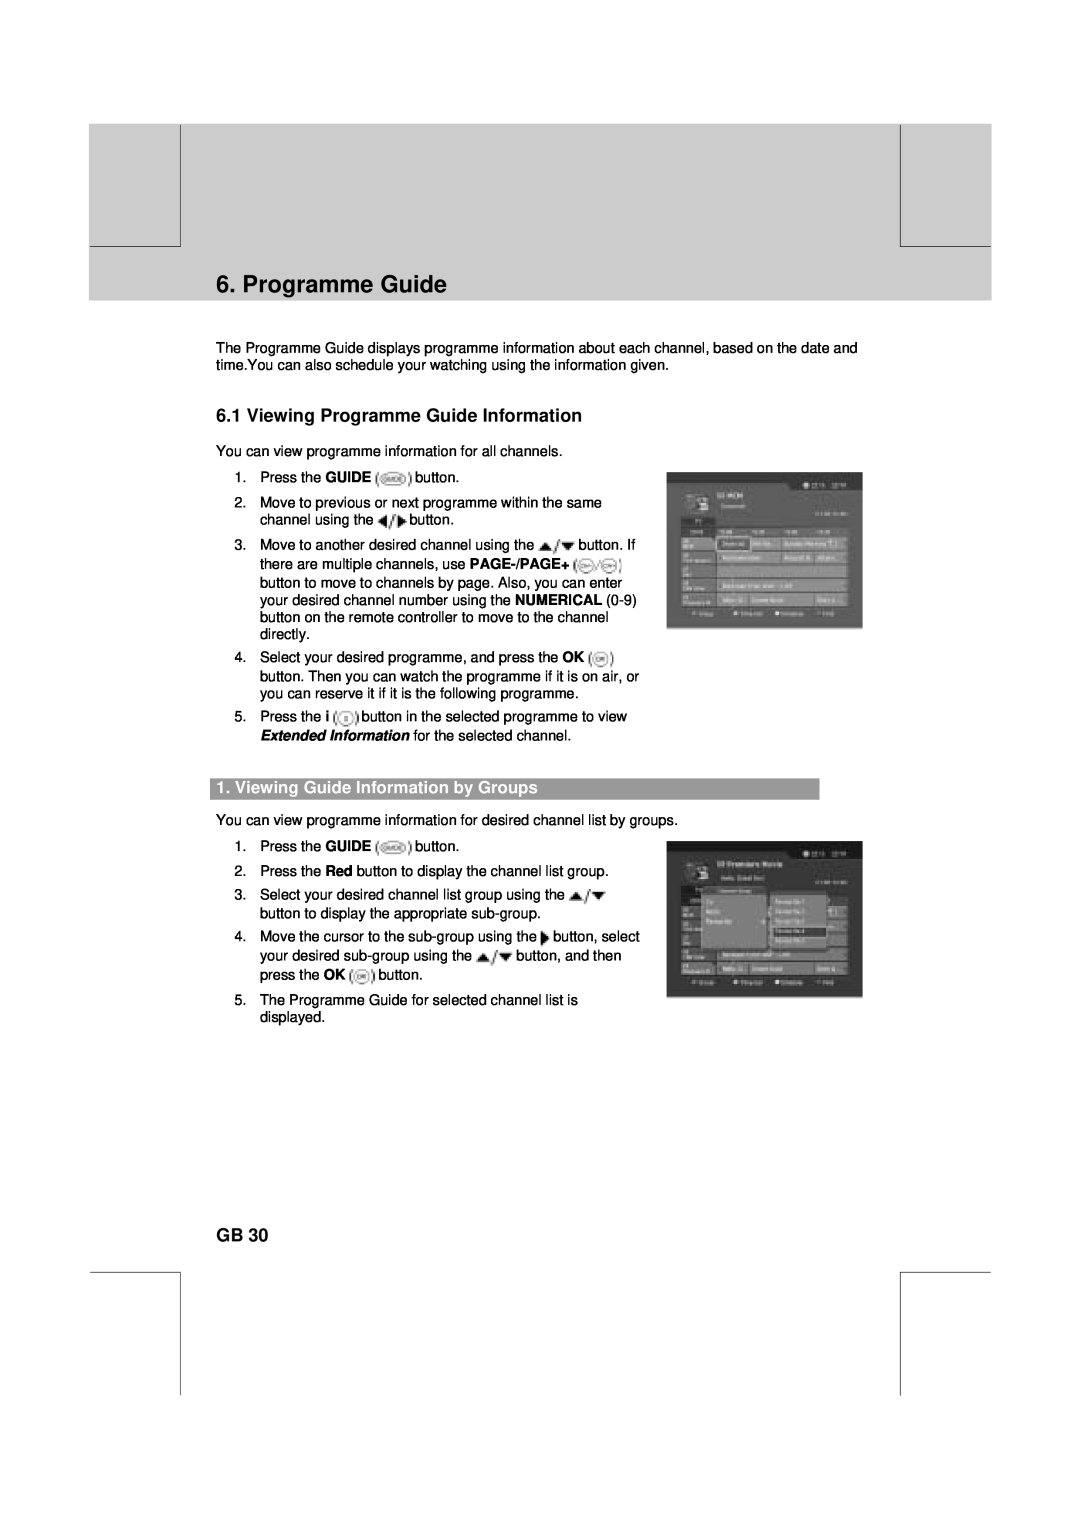 Humax VA-FOX T manual Viewing Programme Guide Information, Viewing Guide Information by Groups 